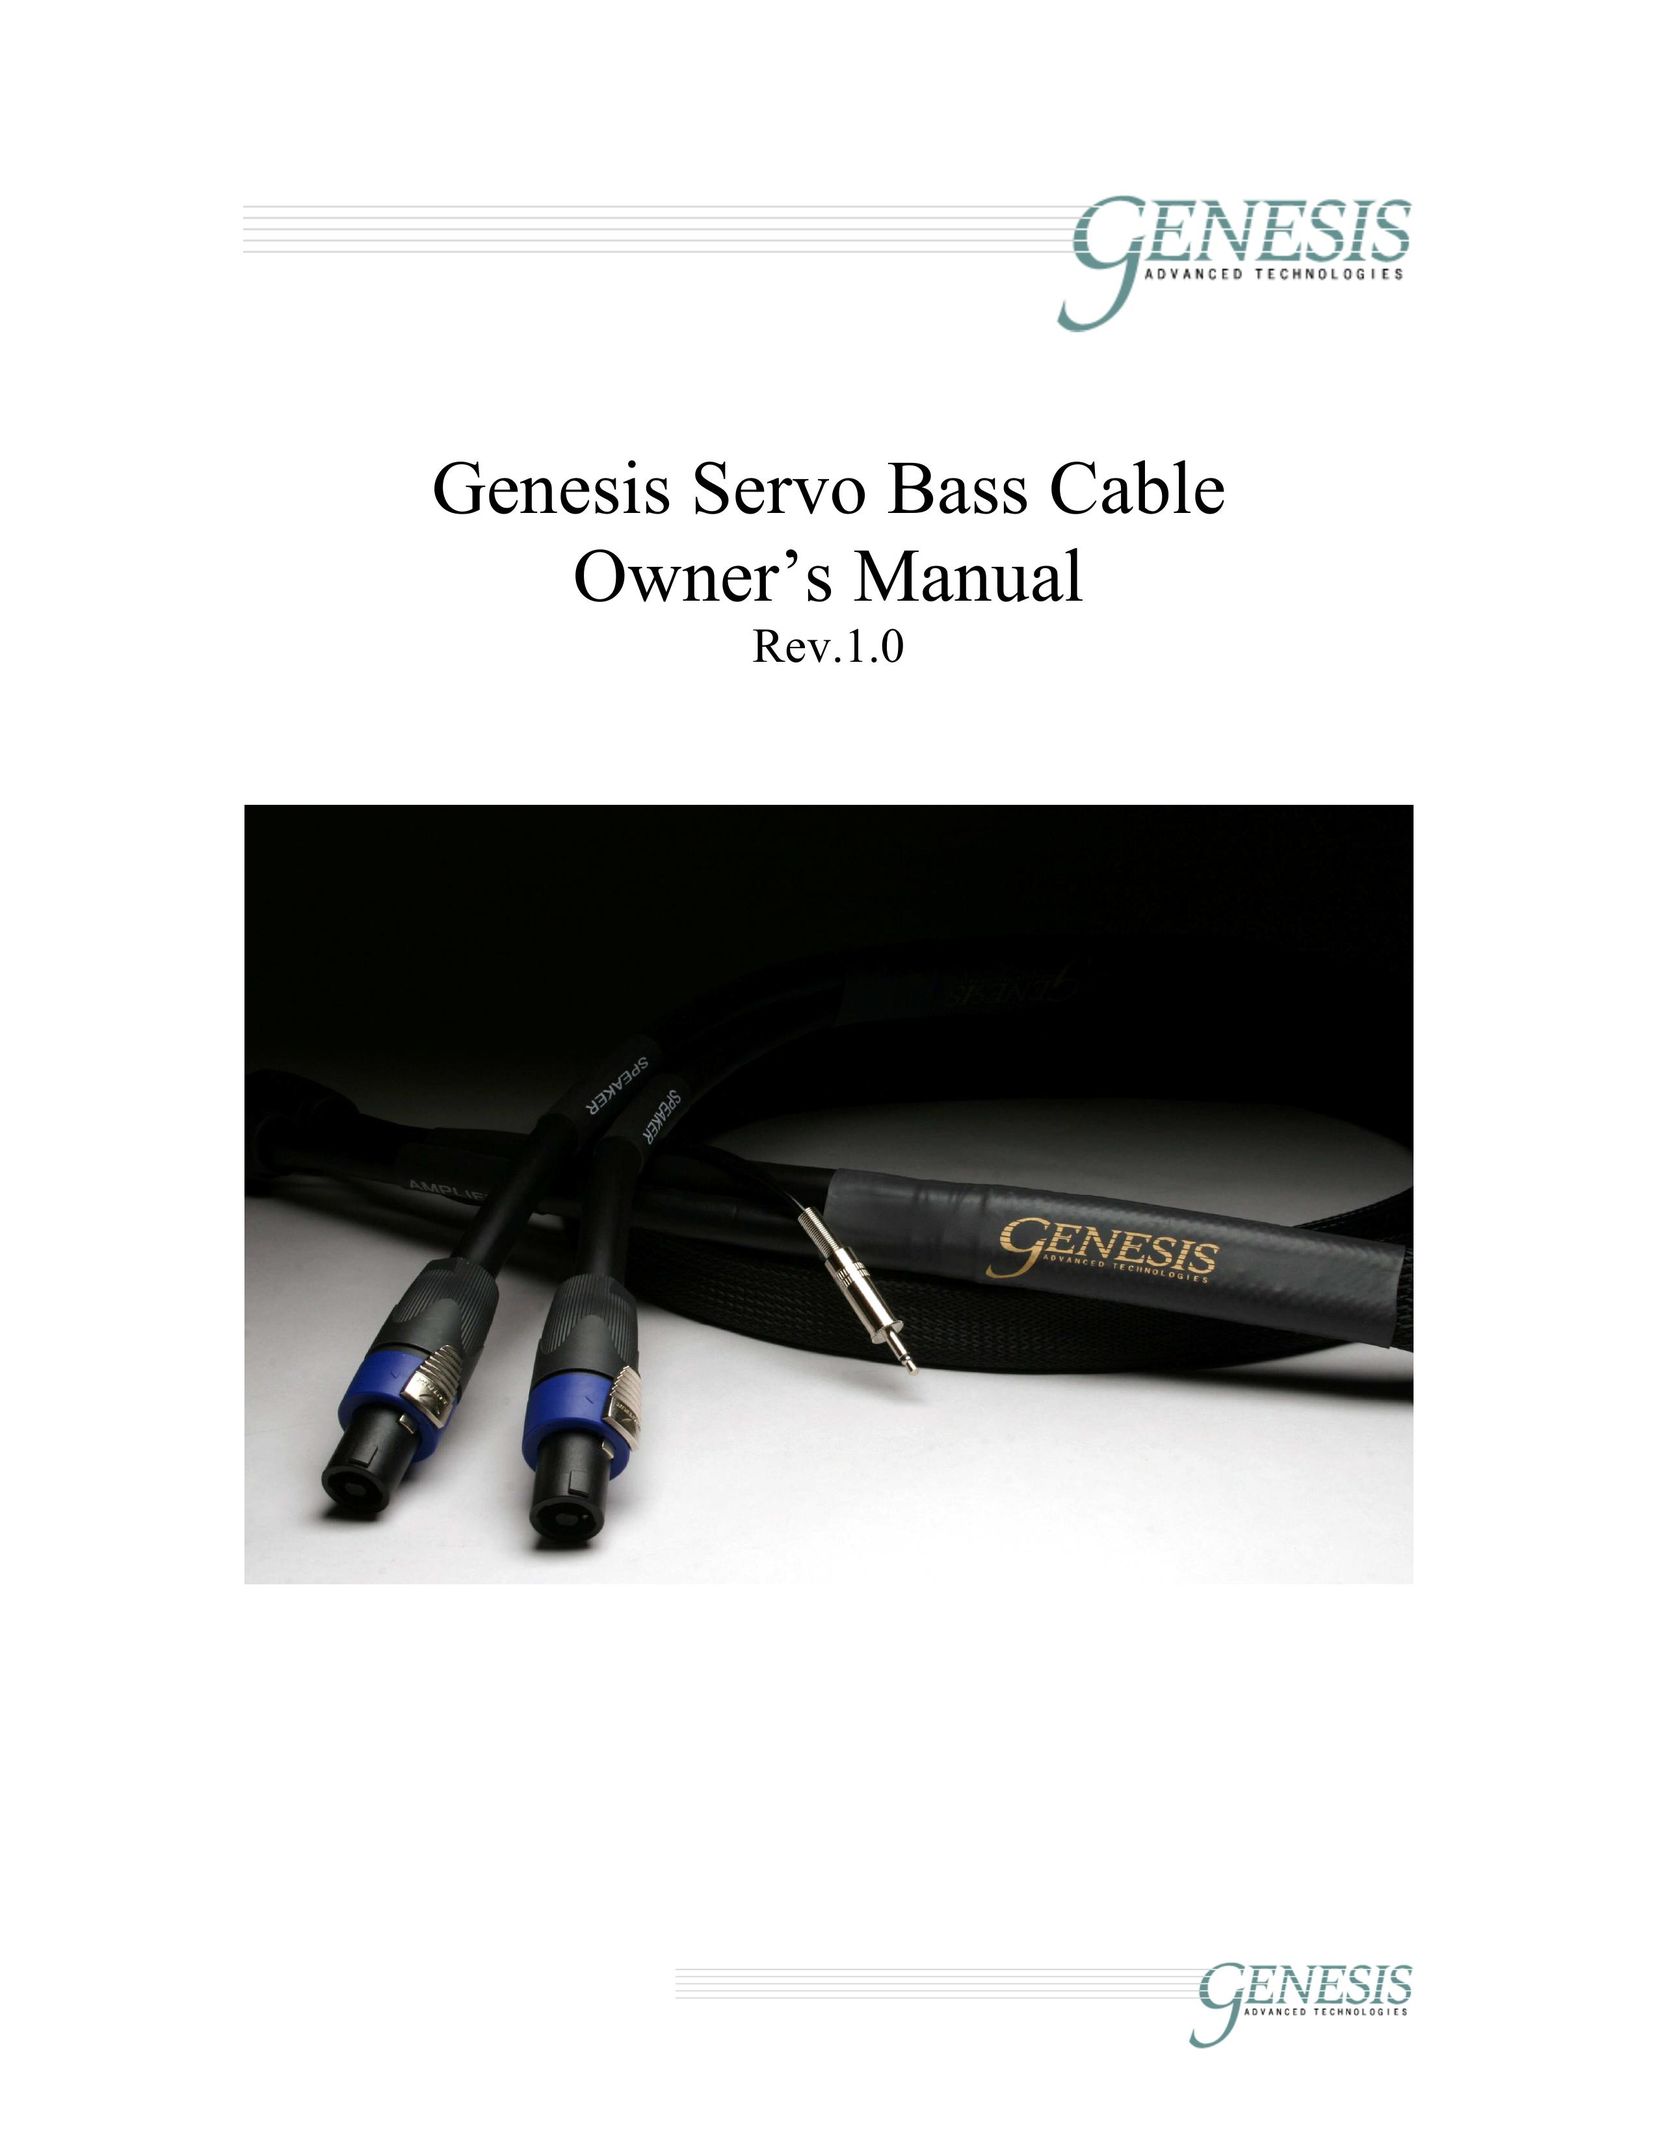 Genesis Advanced Technologies Servo/Bass Stereo System User Manual